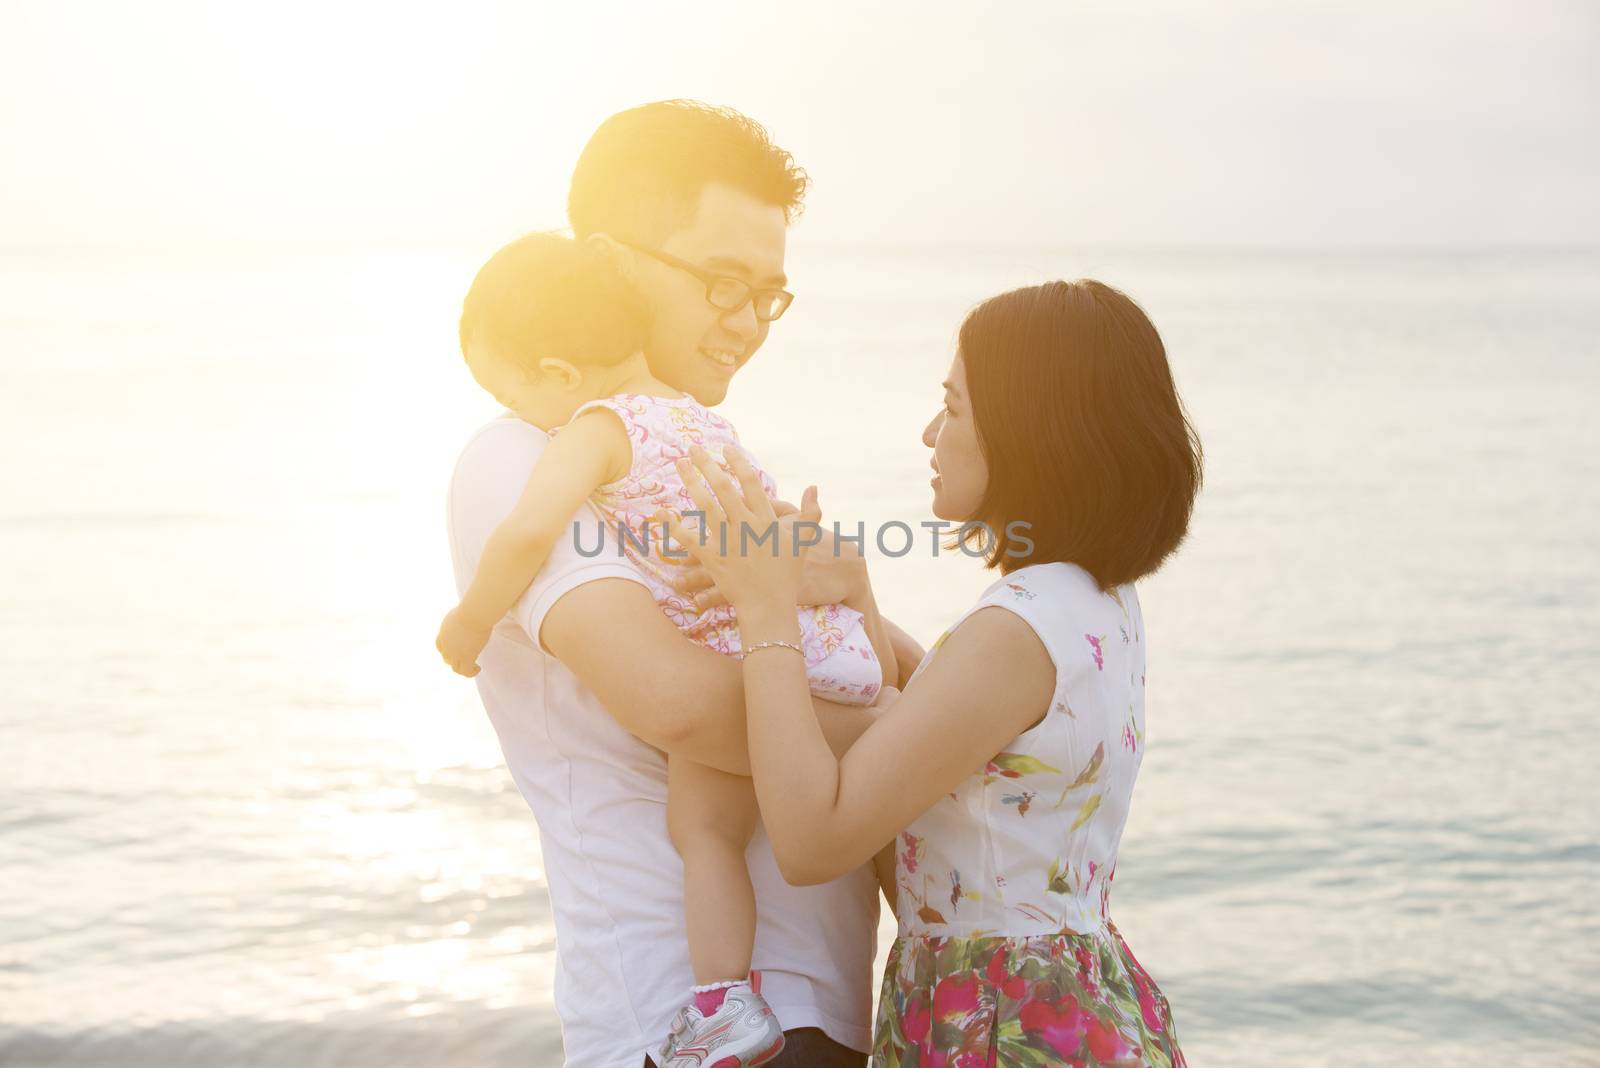 Family enjoying summer vacation at beach by szefei